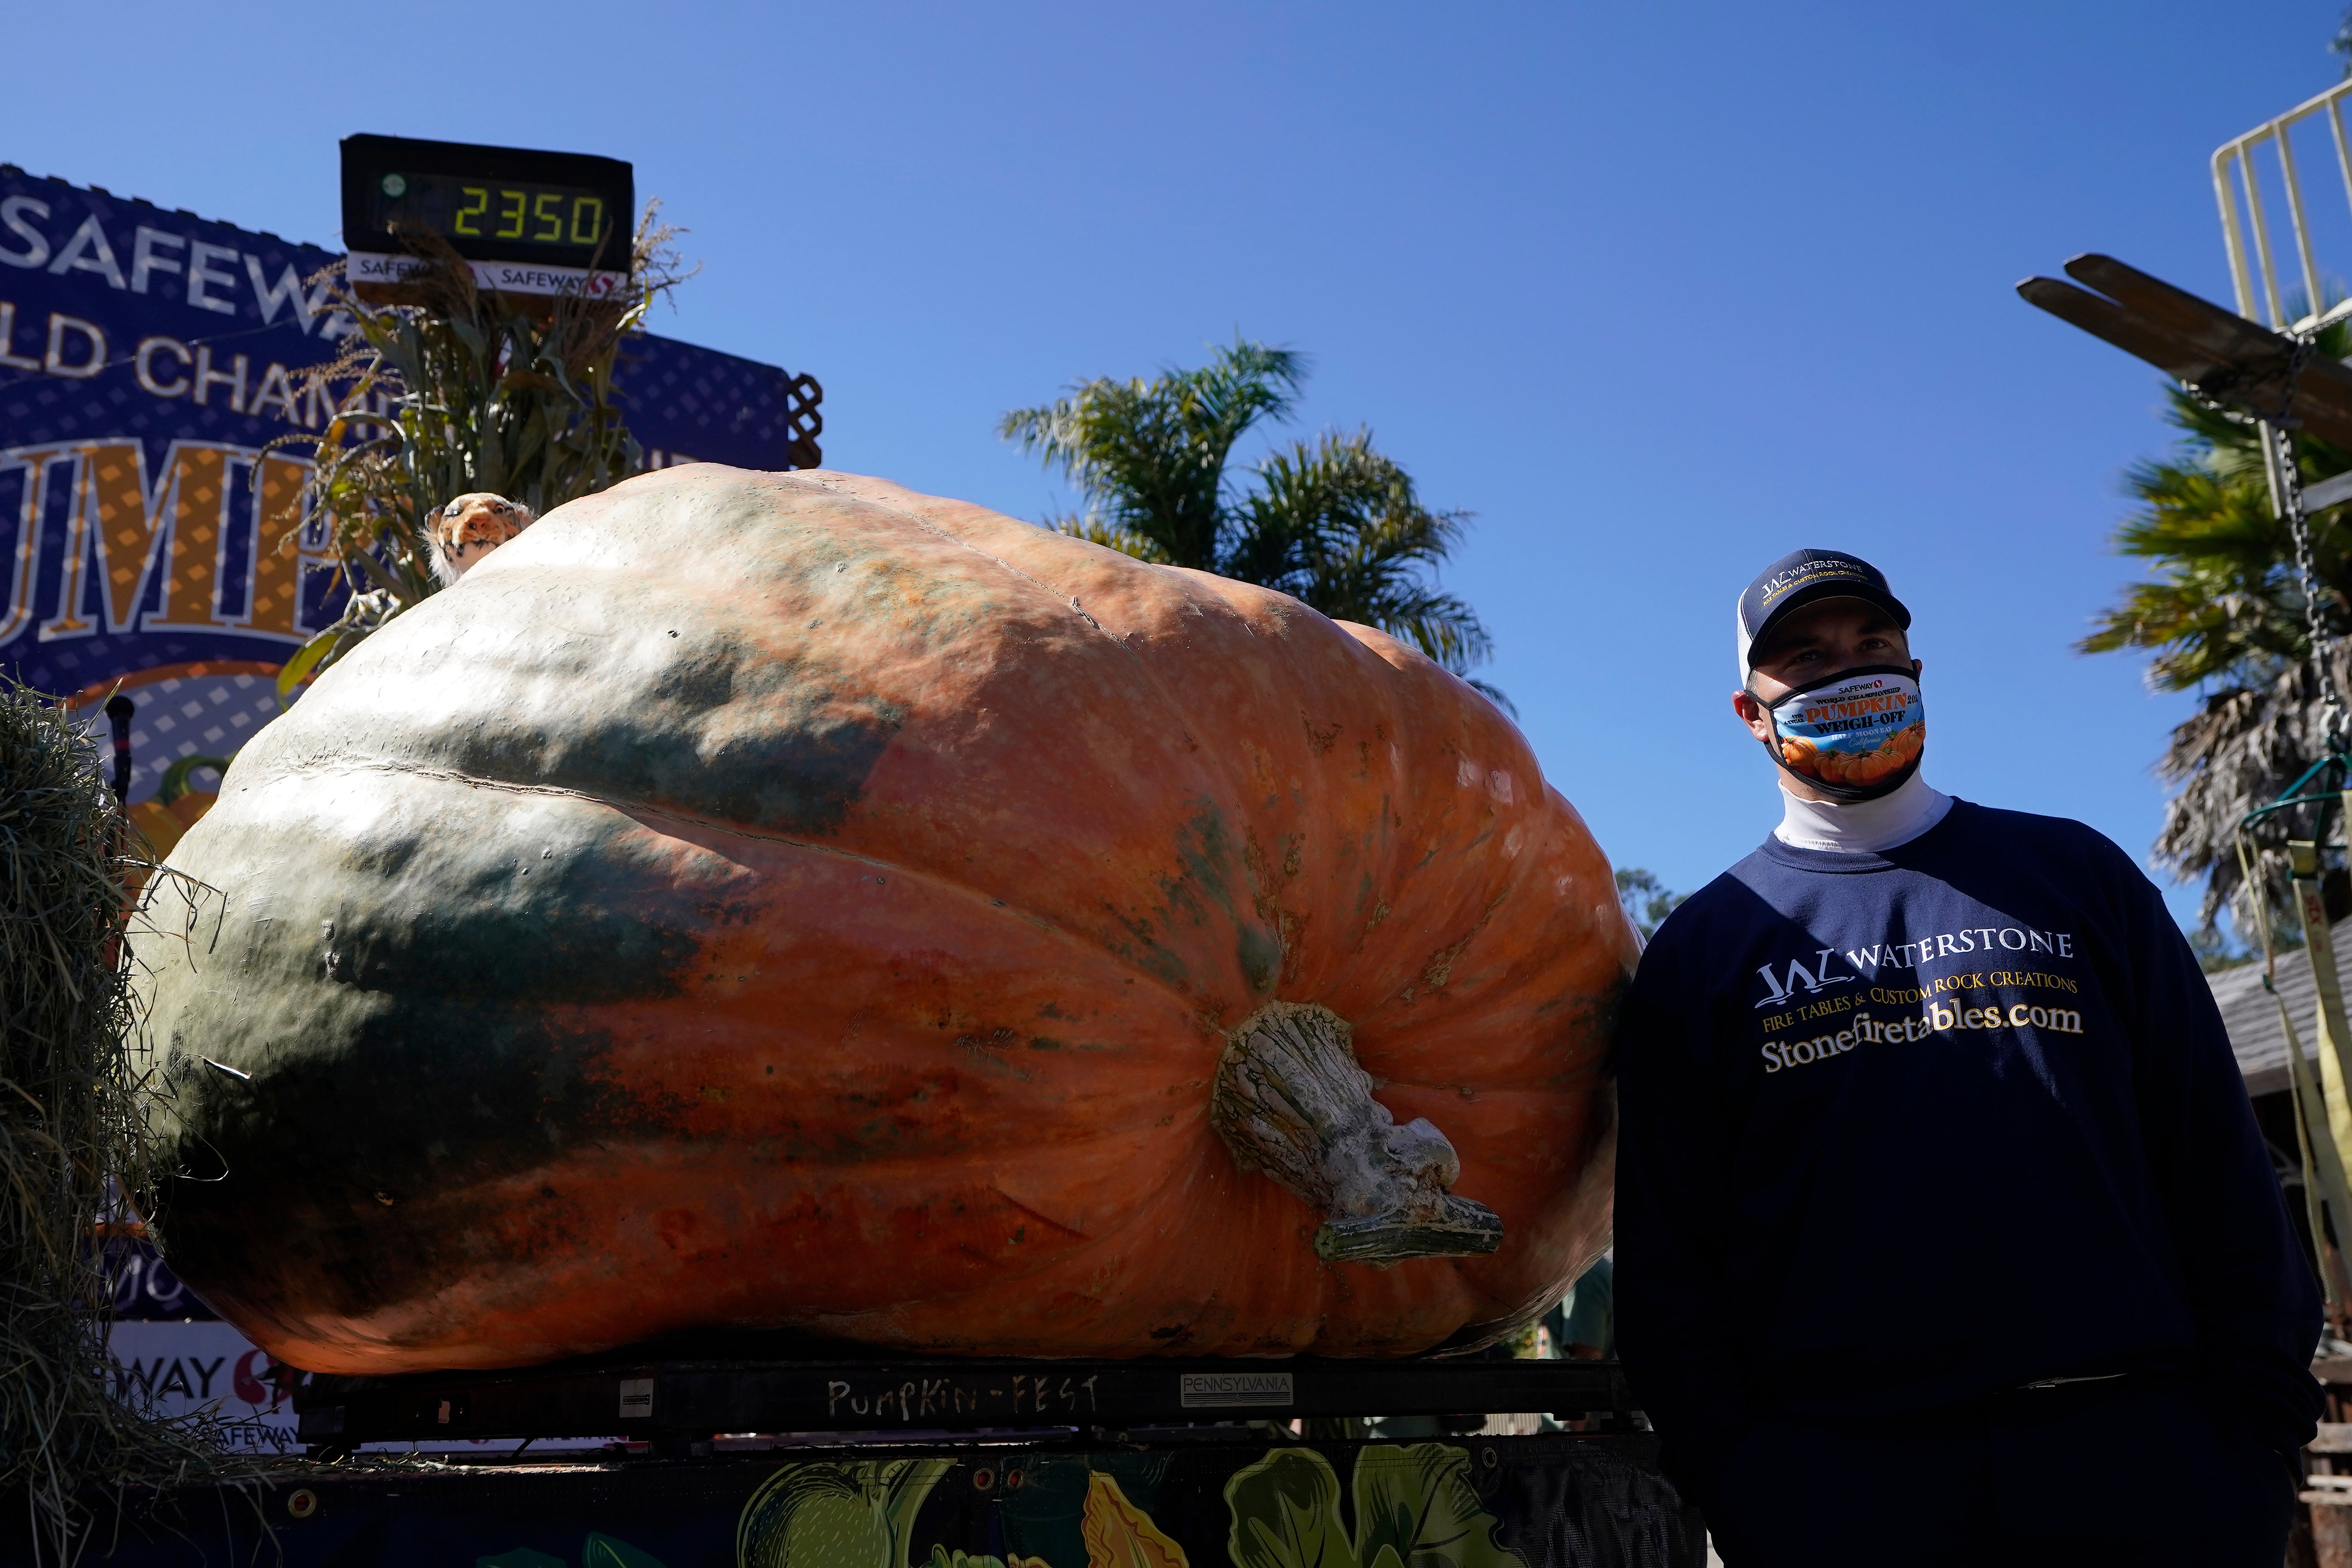 Giant Pumpkin Winner